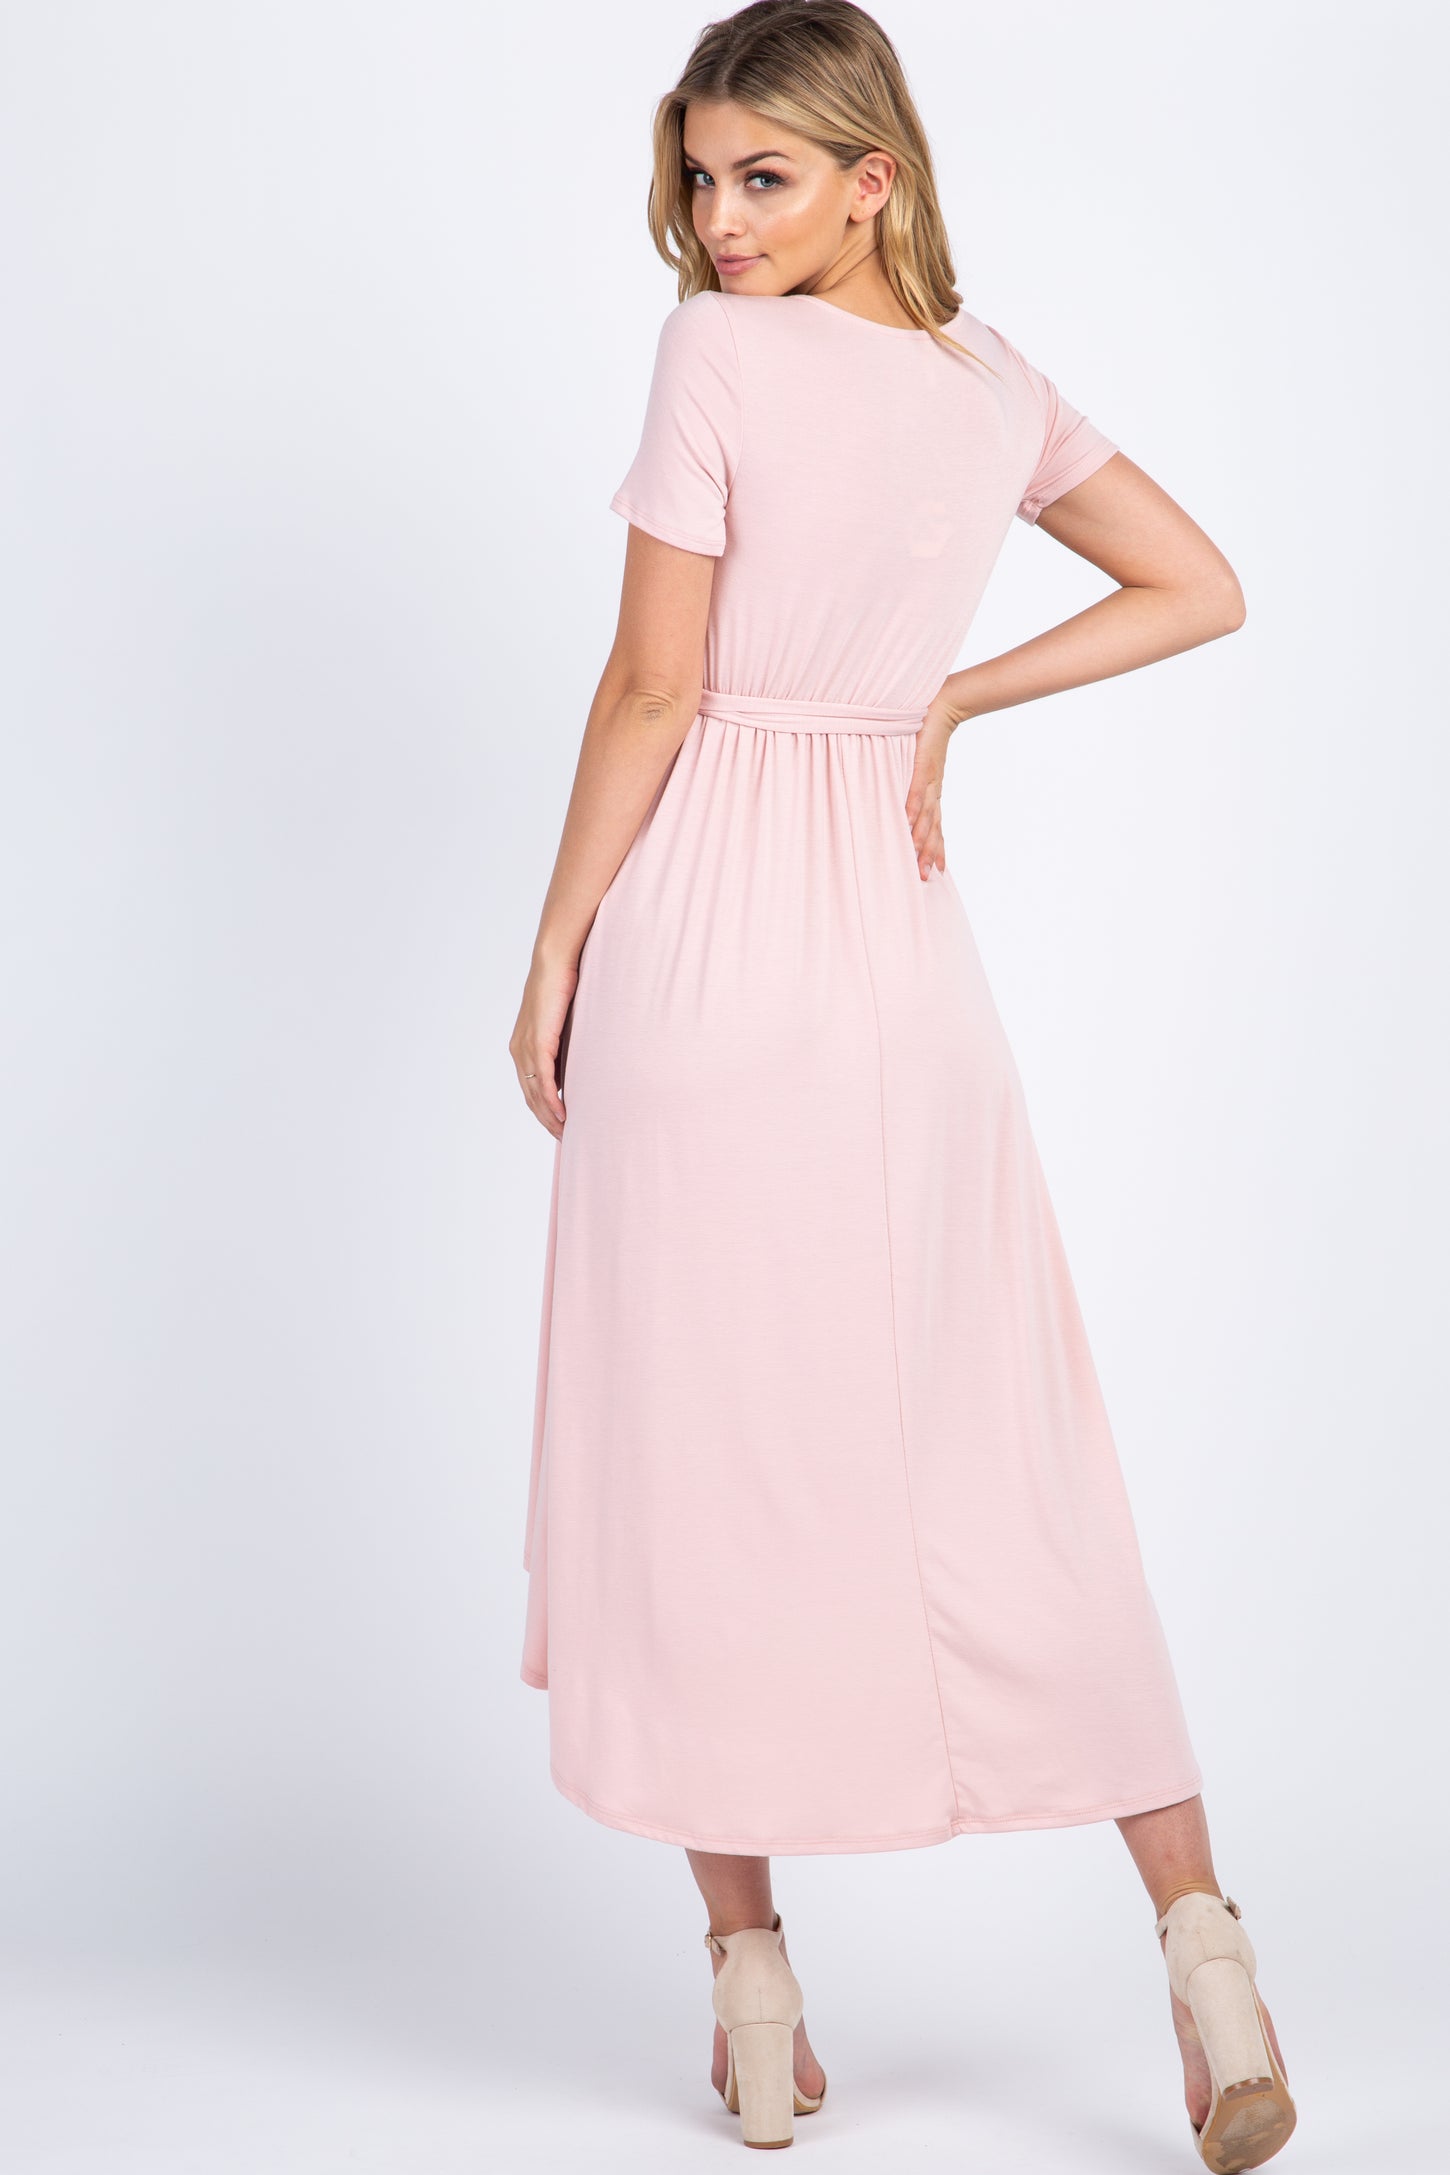 PinkBlush Light Pink Solid Hi-Low Wrap Dress